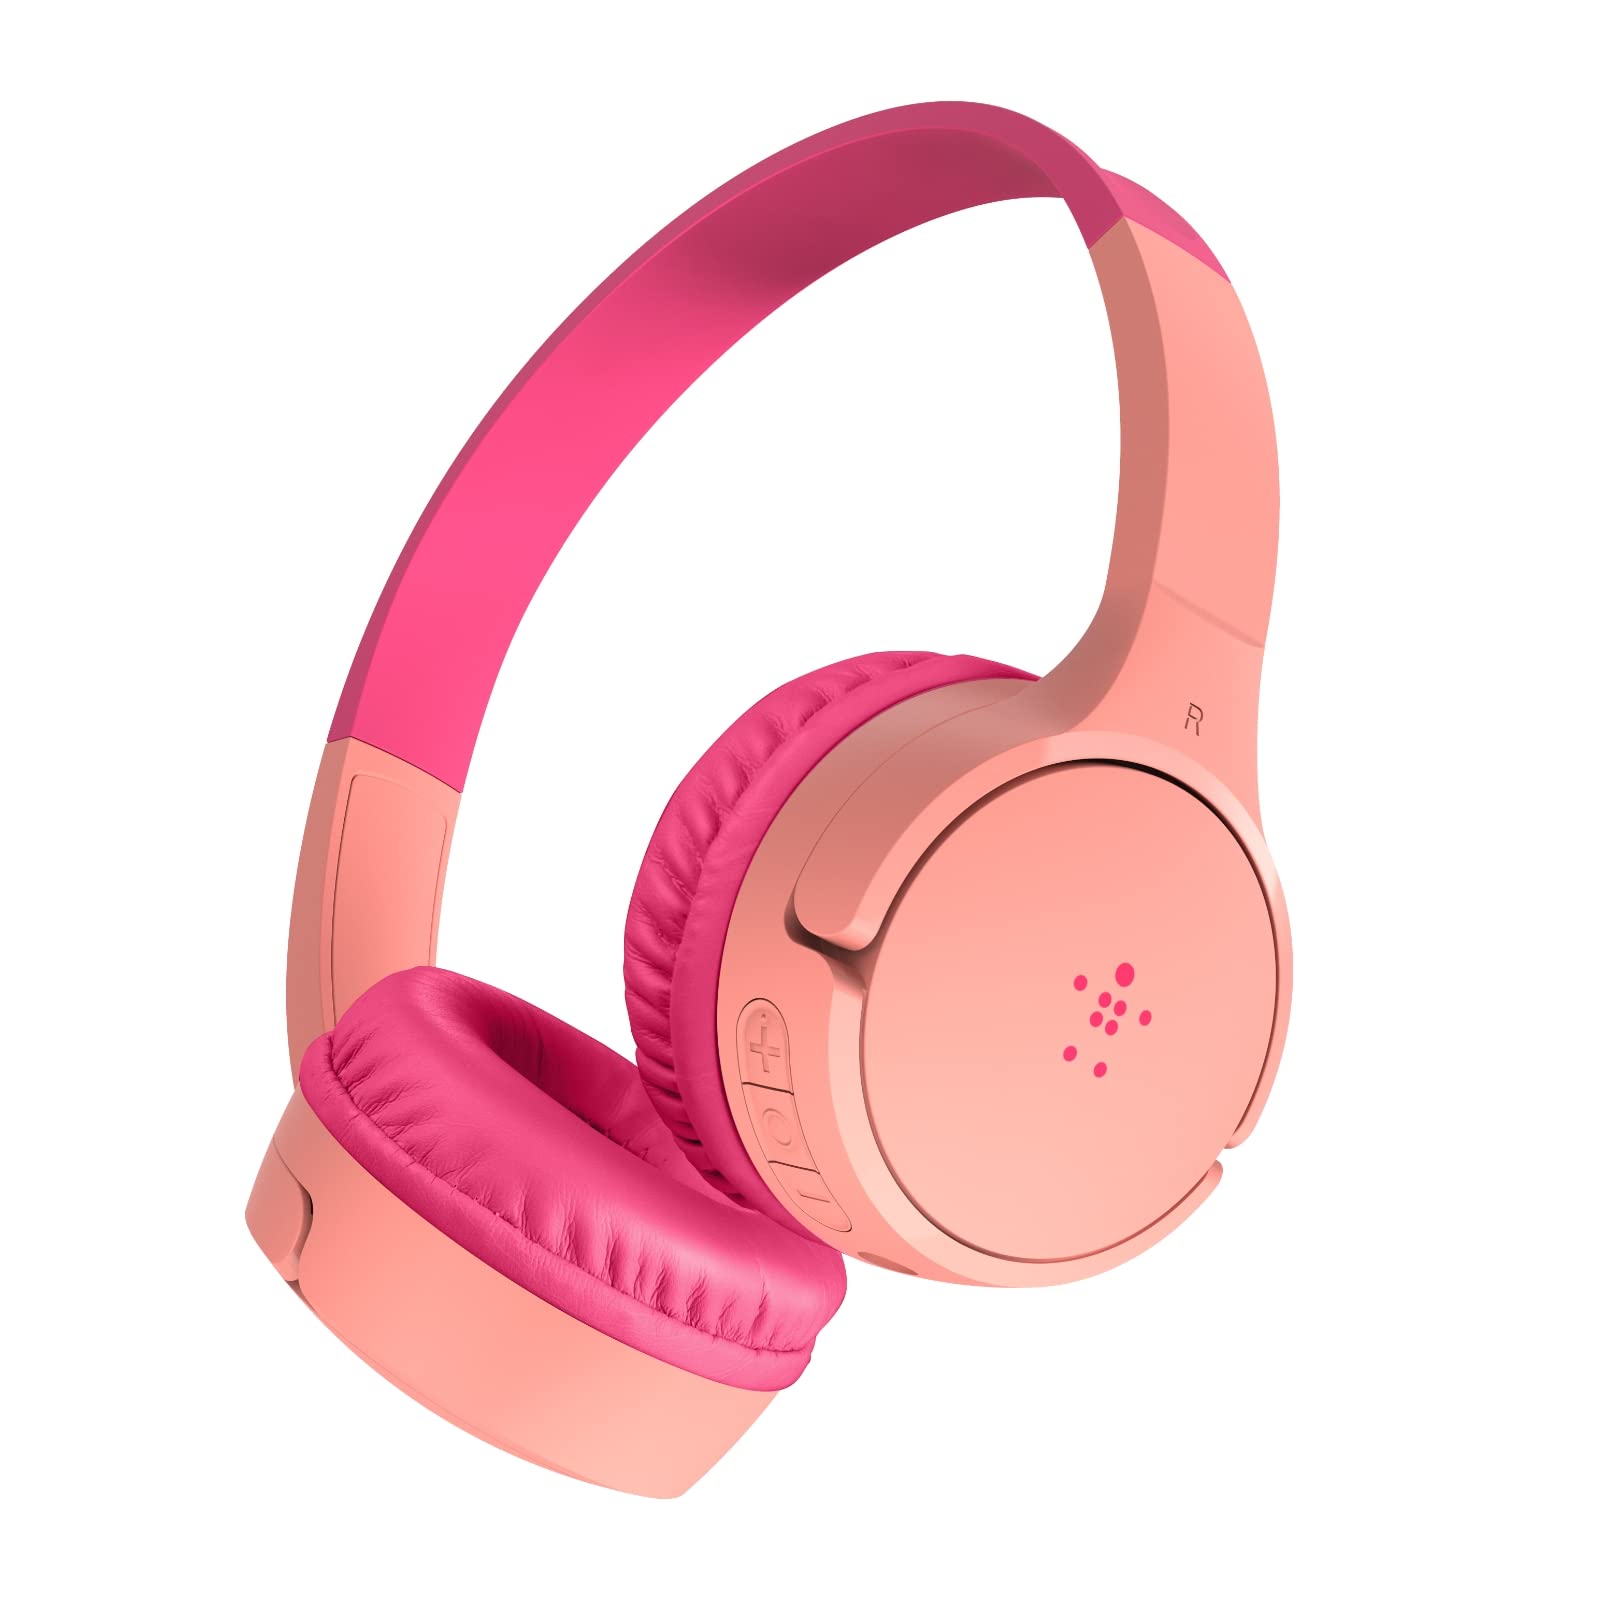  Belkin SoundForm Mini - سماعات بلوتوث لاسلكية للأطفال مع ميكروفون مدمج - سماعات على الأذن لأجهزة iPhone و iPad و Fire Tablet والمزيد...